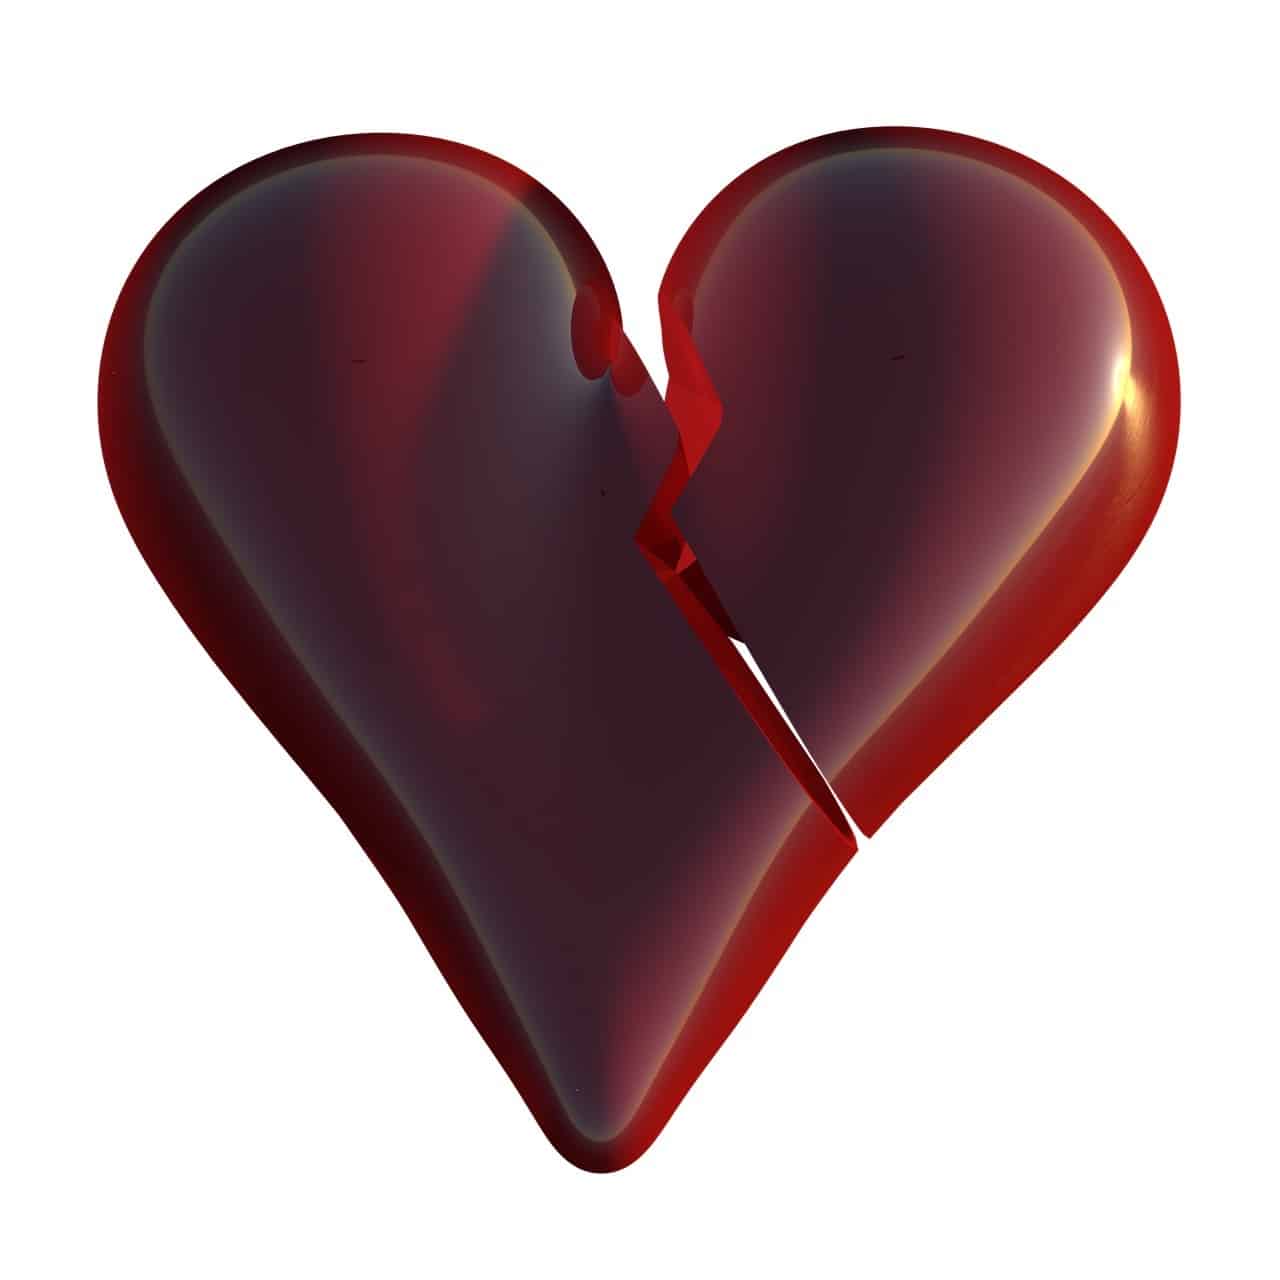 50+] Broken Heart DP for Whatsapp & Instagram (HD)